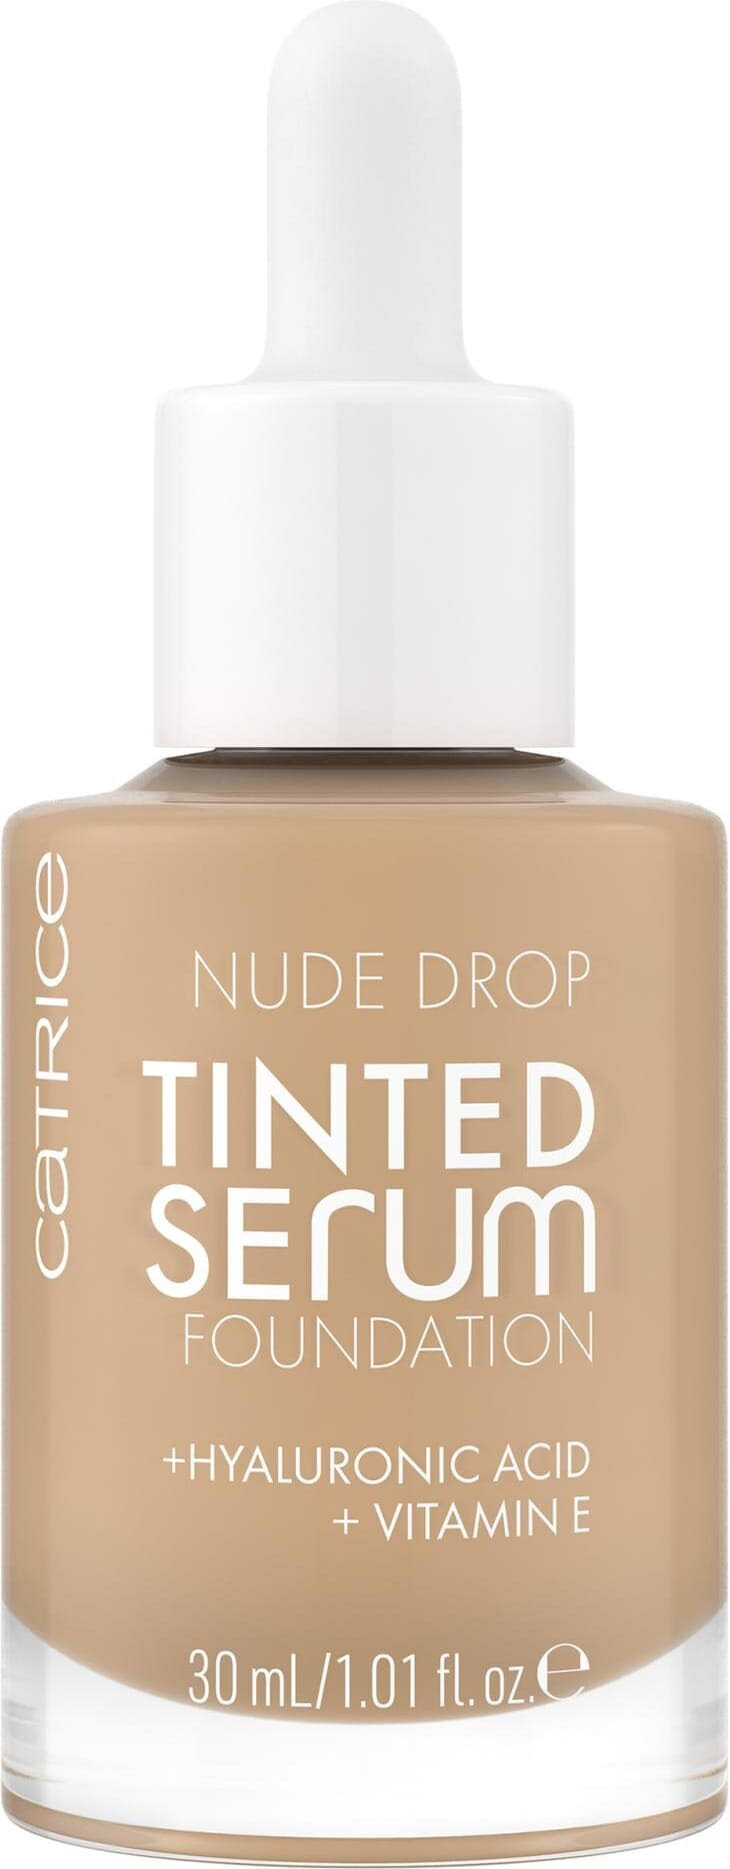 Catrice Nude Drop Tinted Serum Foundation 030C 30ml (1.01 FL oz)